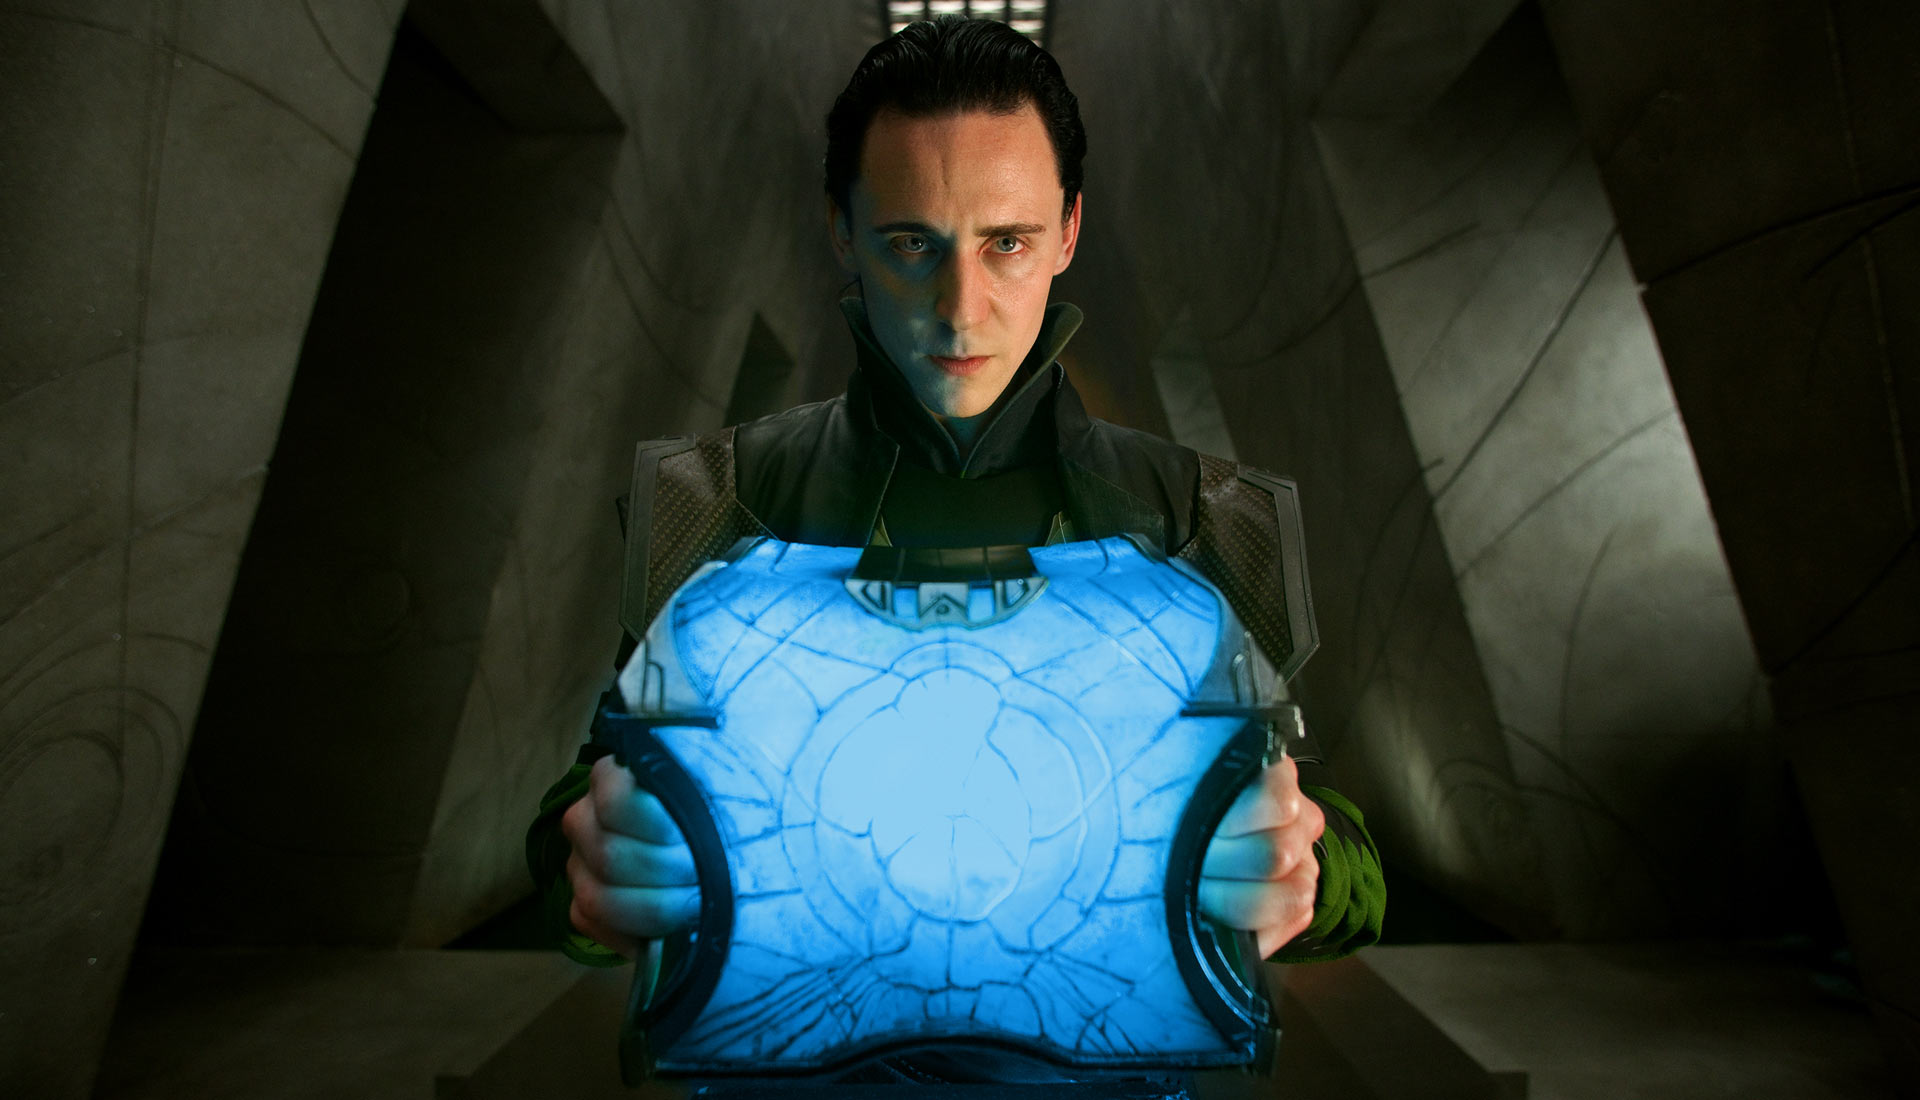 http://simplywallpaper.net/pictures/2011/05/16/Loki-Thor-Movie-Wallpaper-6.jpg